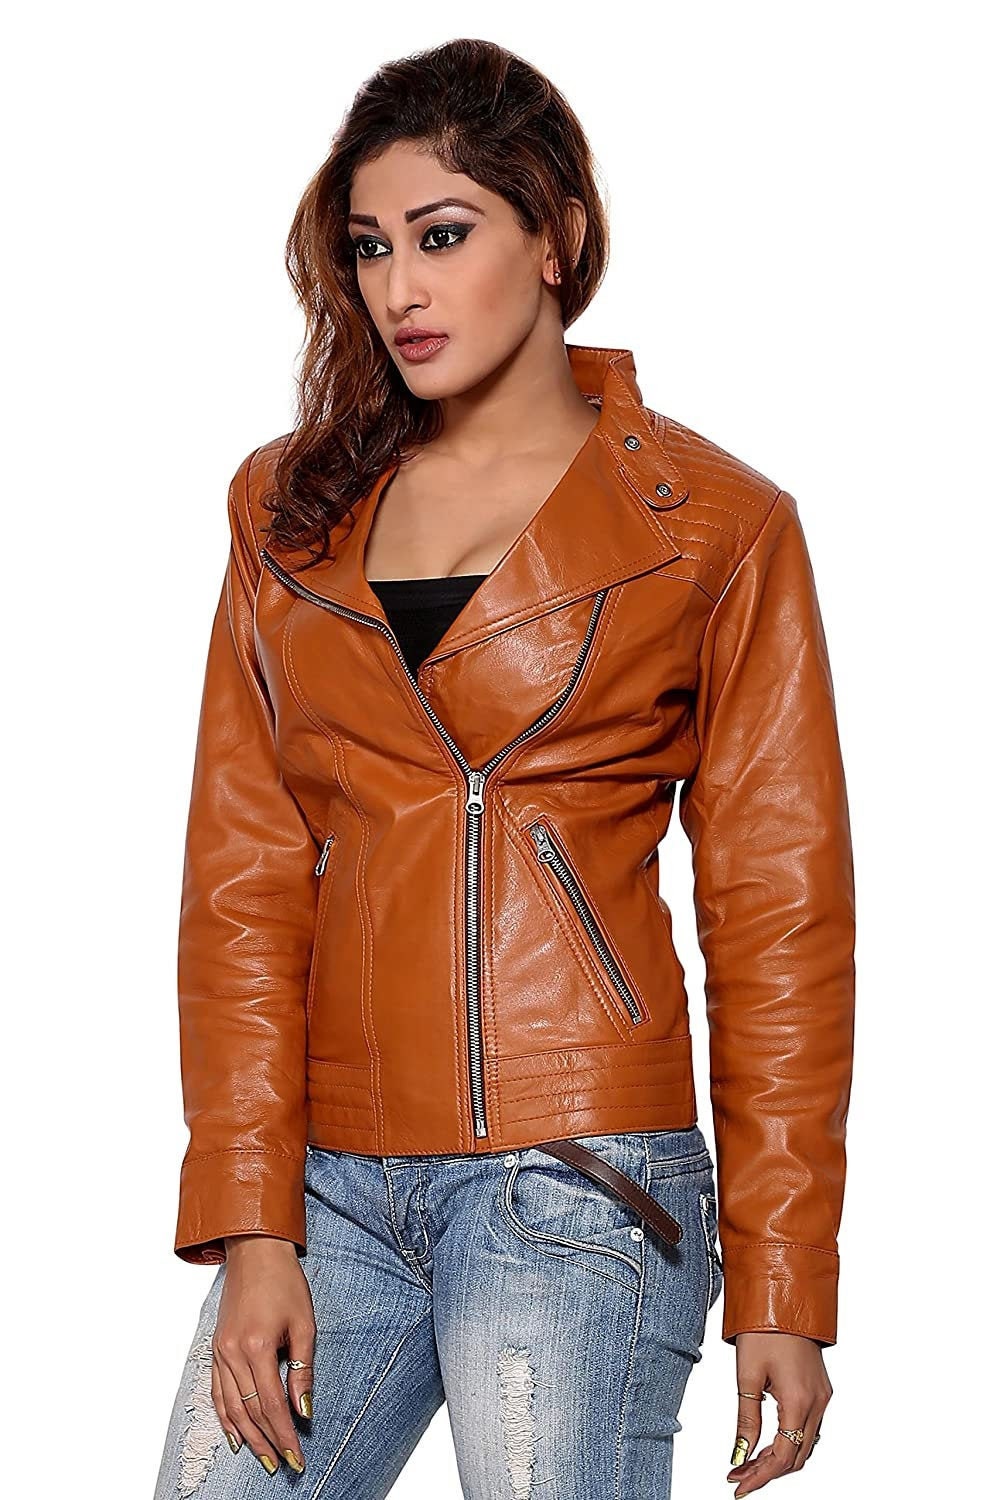 LINDSEY STREET Genuine Leather Jacket for Women Slim Fit Leather Jacket Biker Jacket